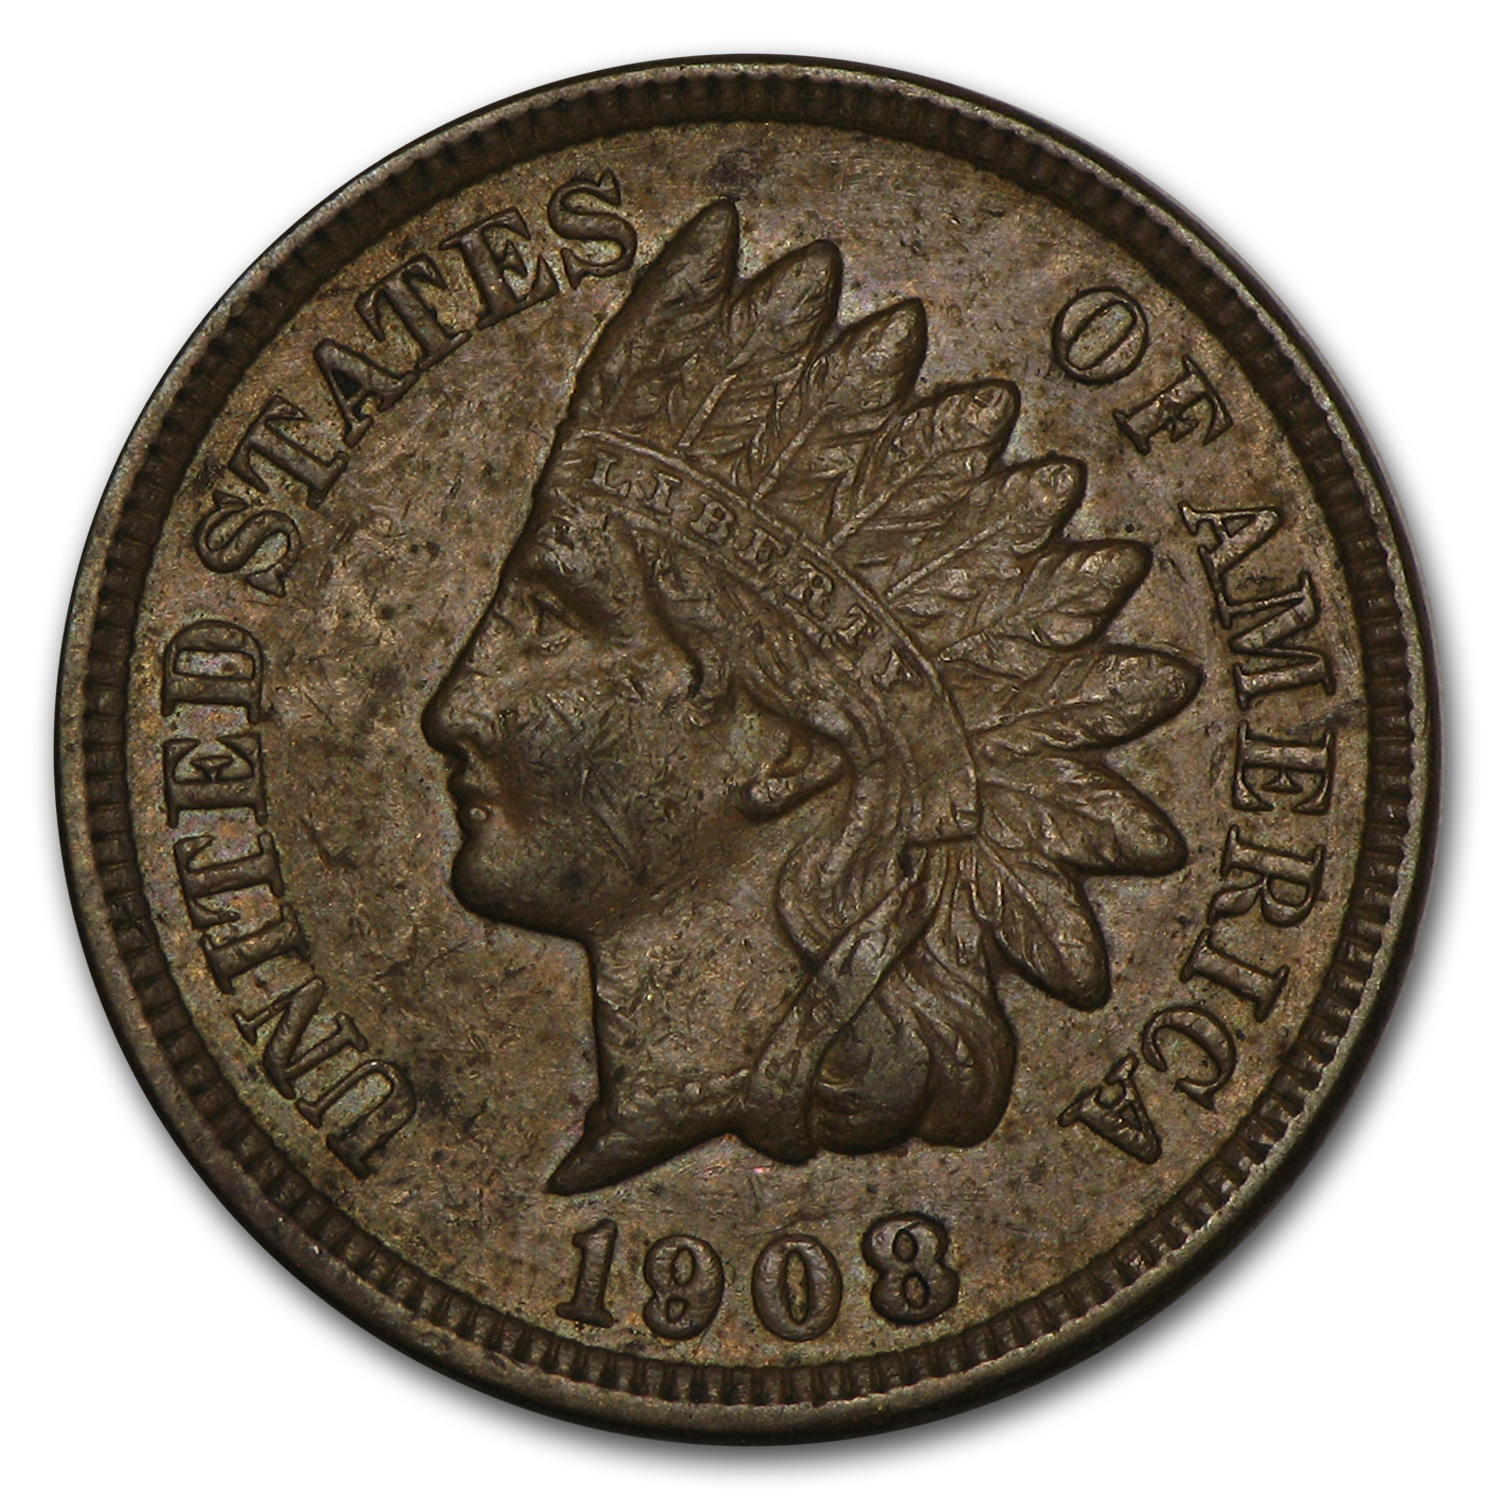 Buy 1908 Indian Head Cent AU